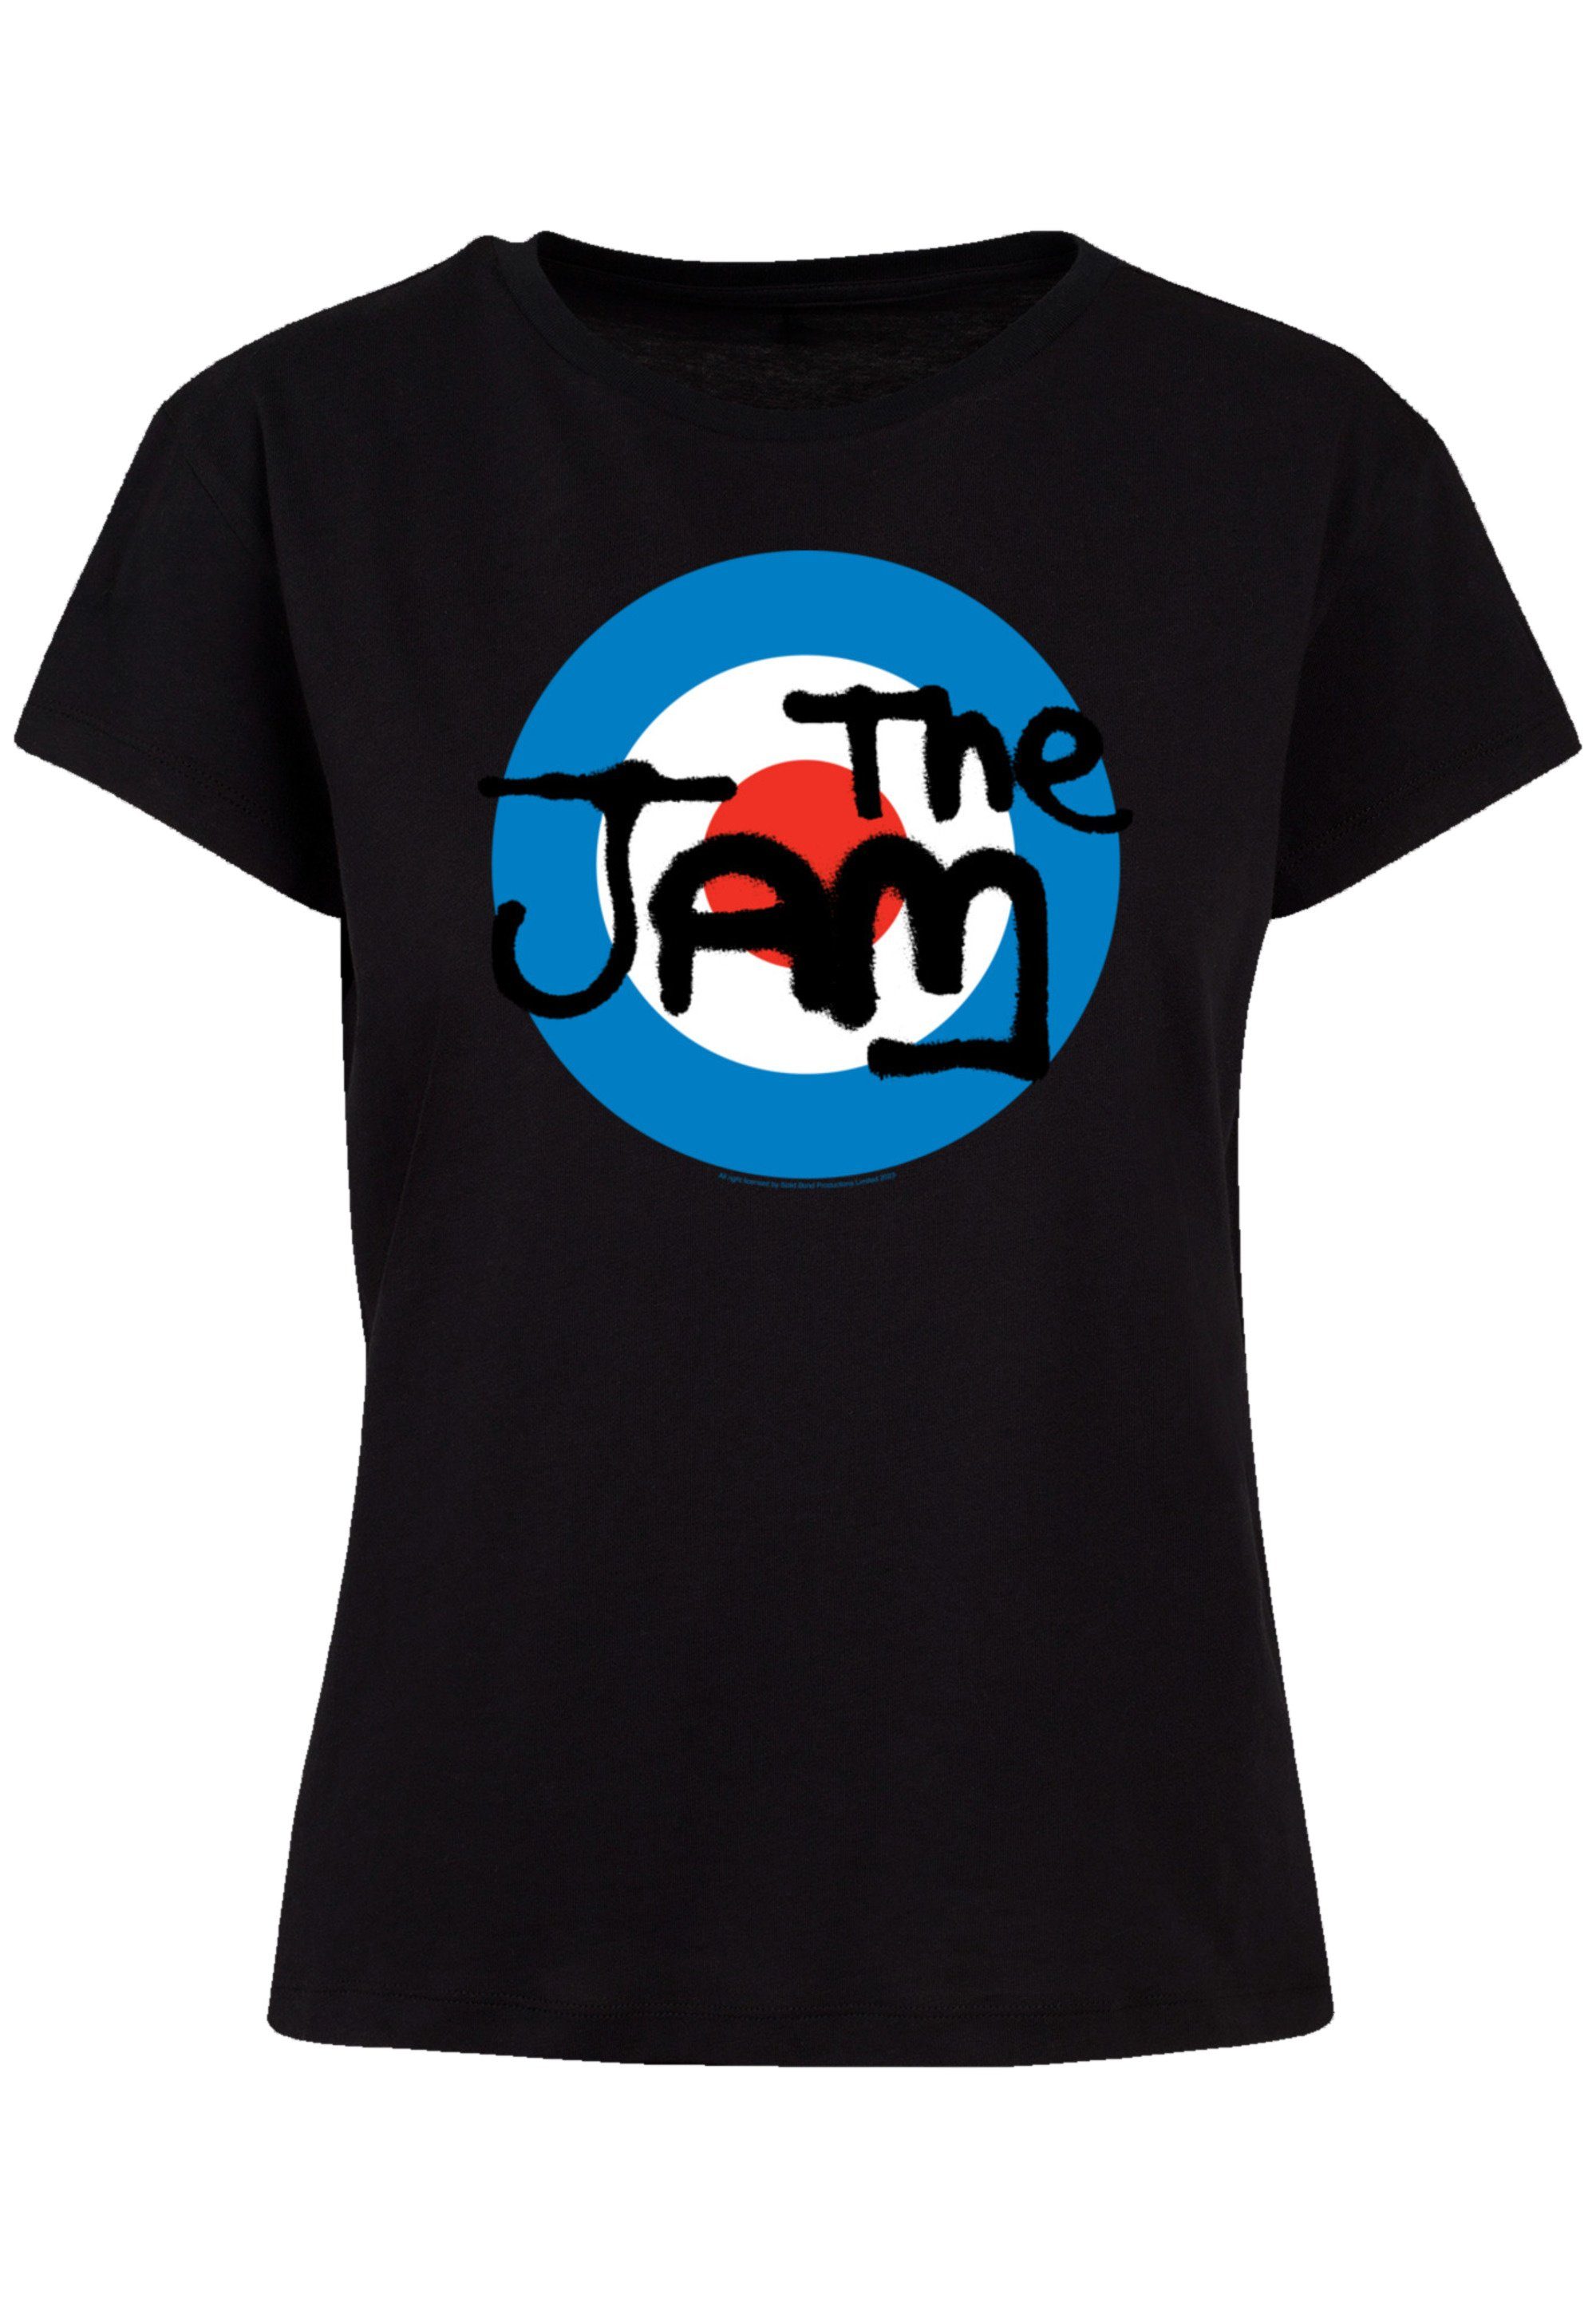 Logo Jam schwarz Classic F4NT4STIC Band The T-Shirt Premium Qualität